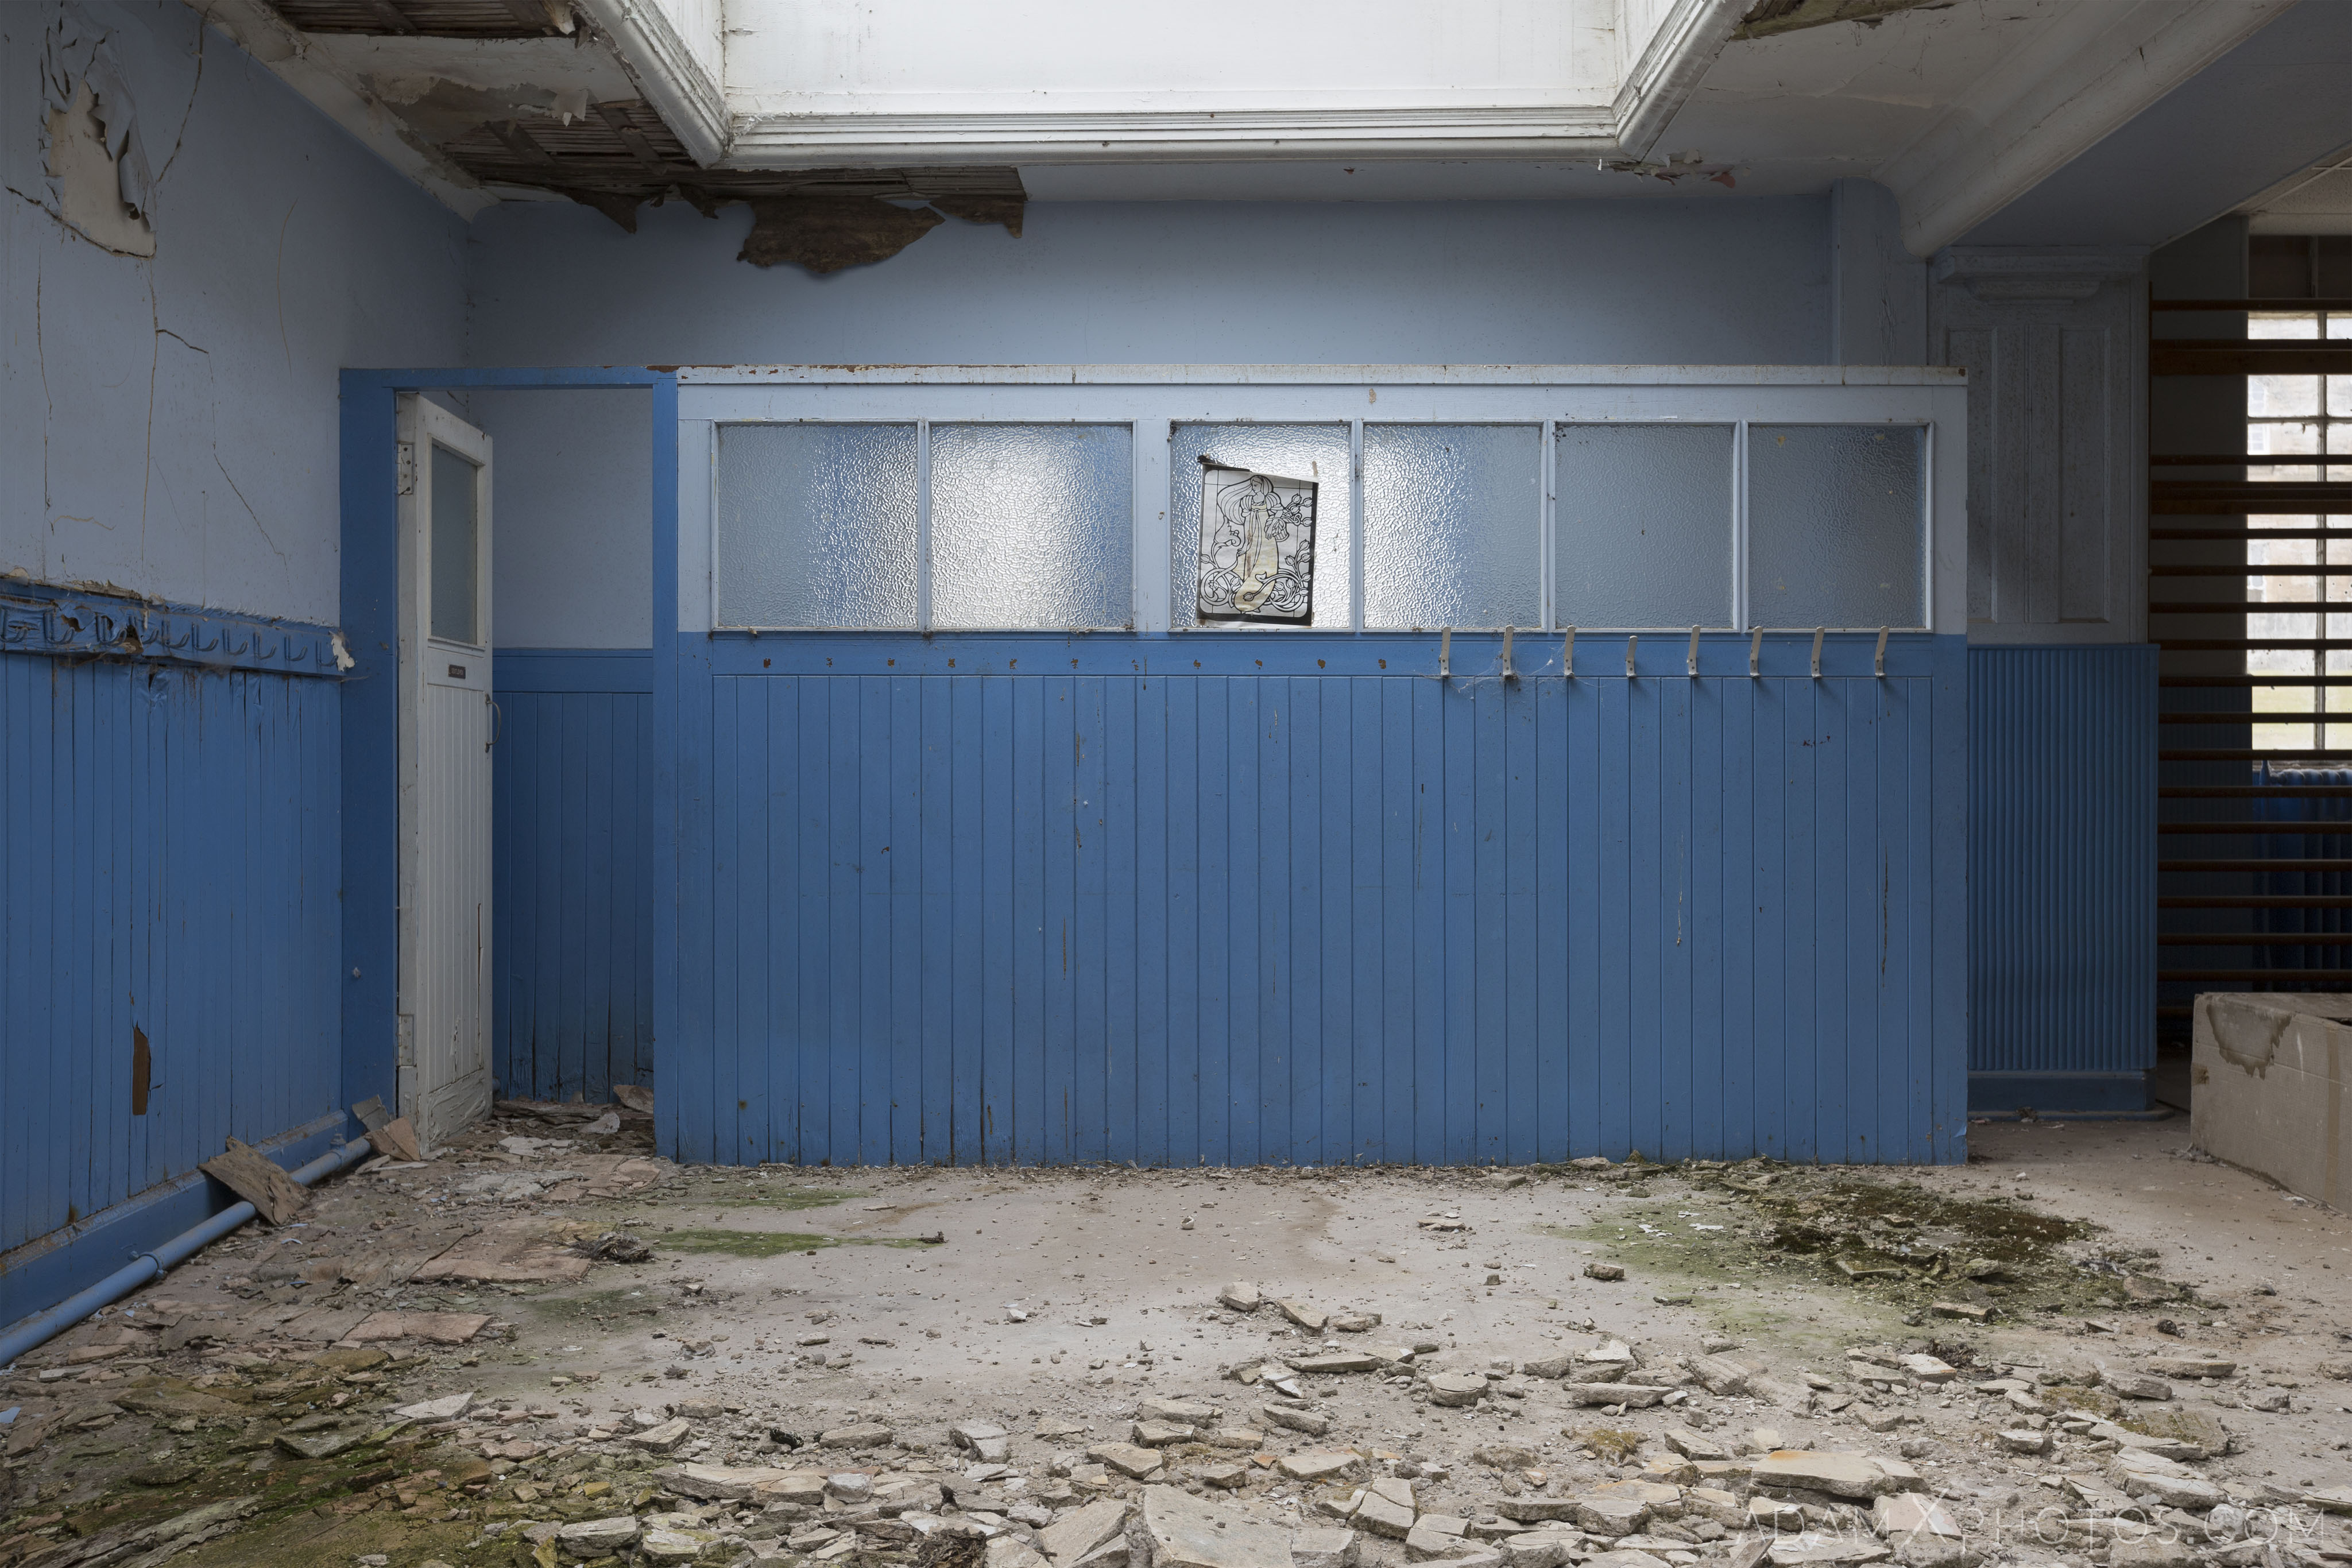 Changing room Stratheden Hospital Fife Scotland Adam X Urbex Urban Exploration Access 2018 Abandoned decay ruins lost forgotten derelict location creepy haunting eerie